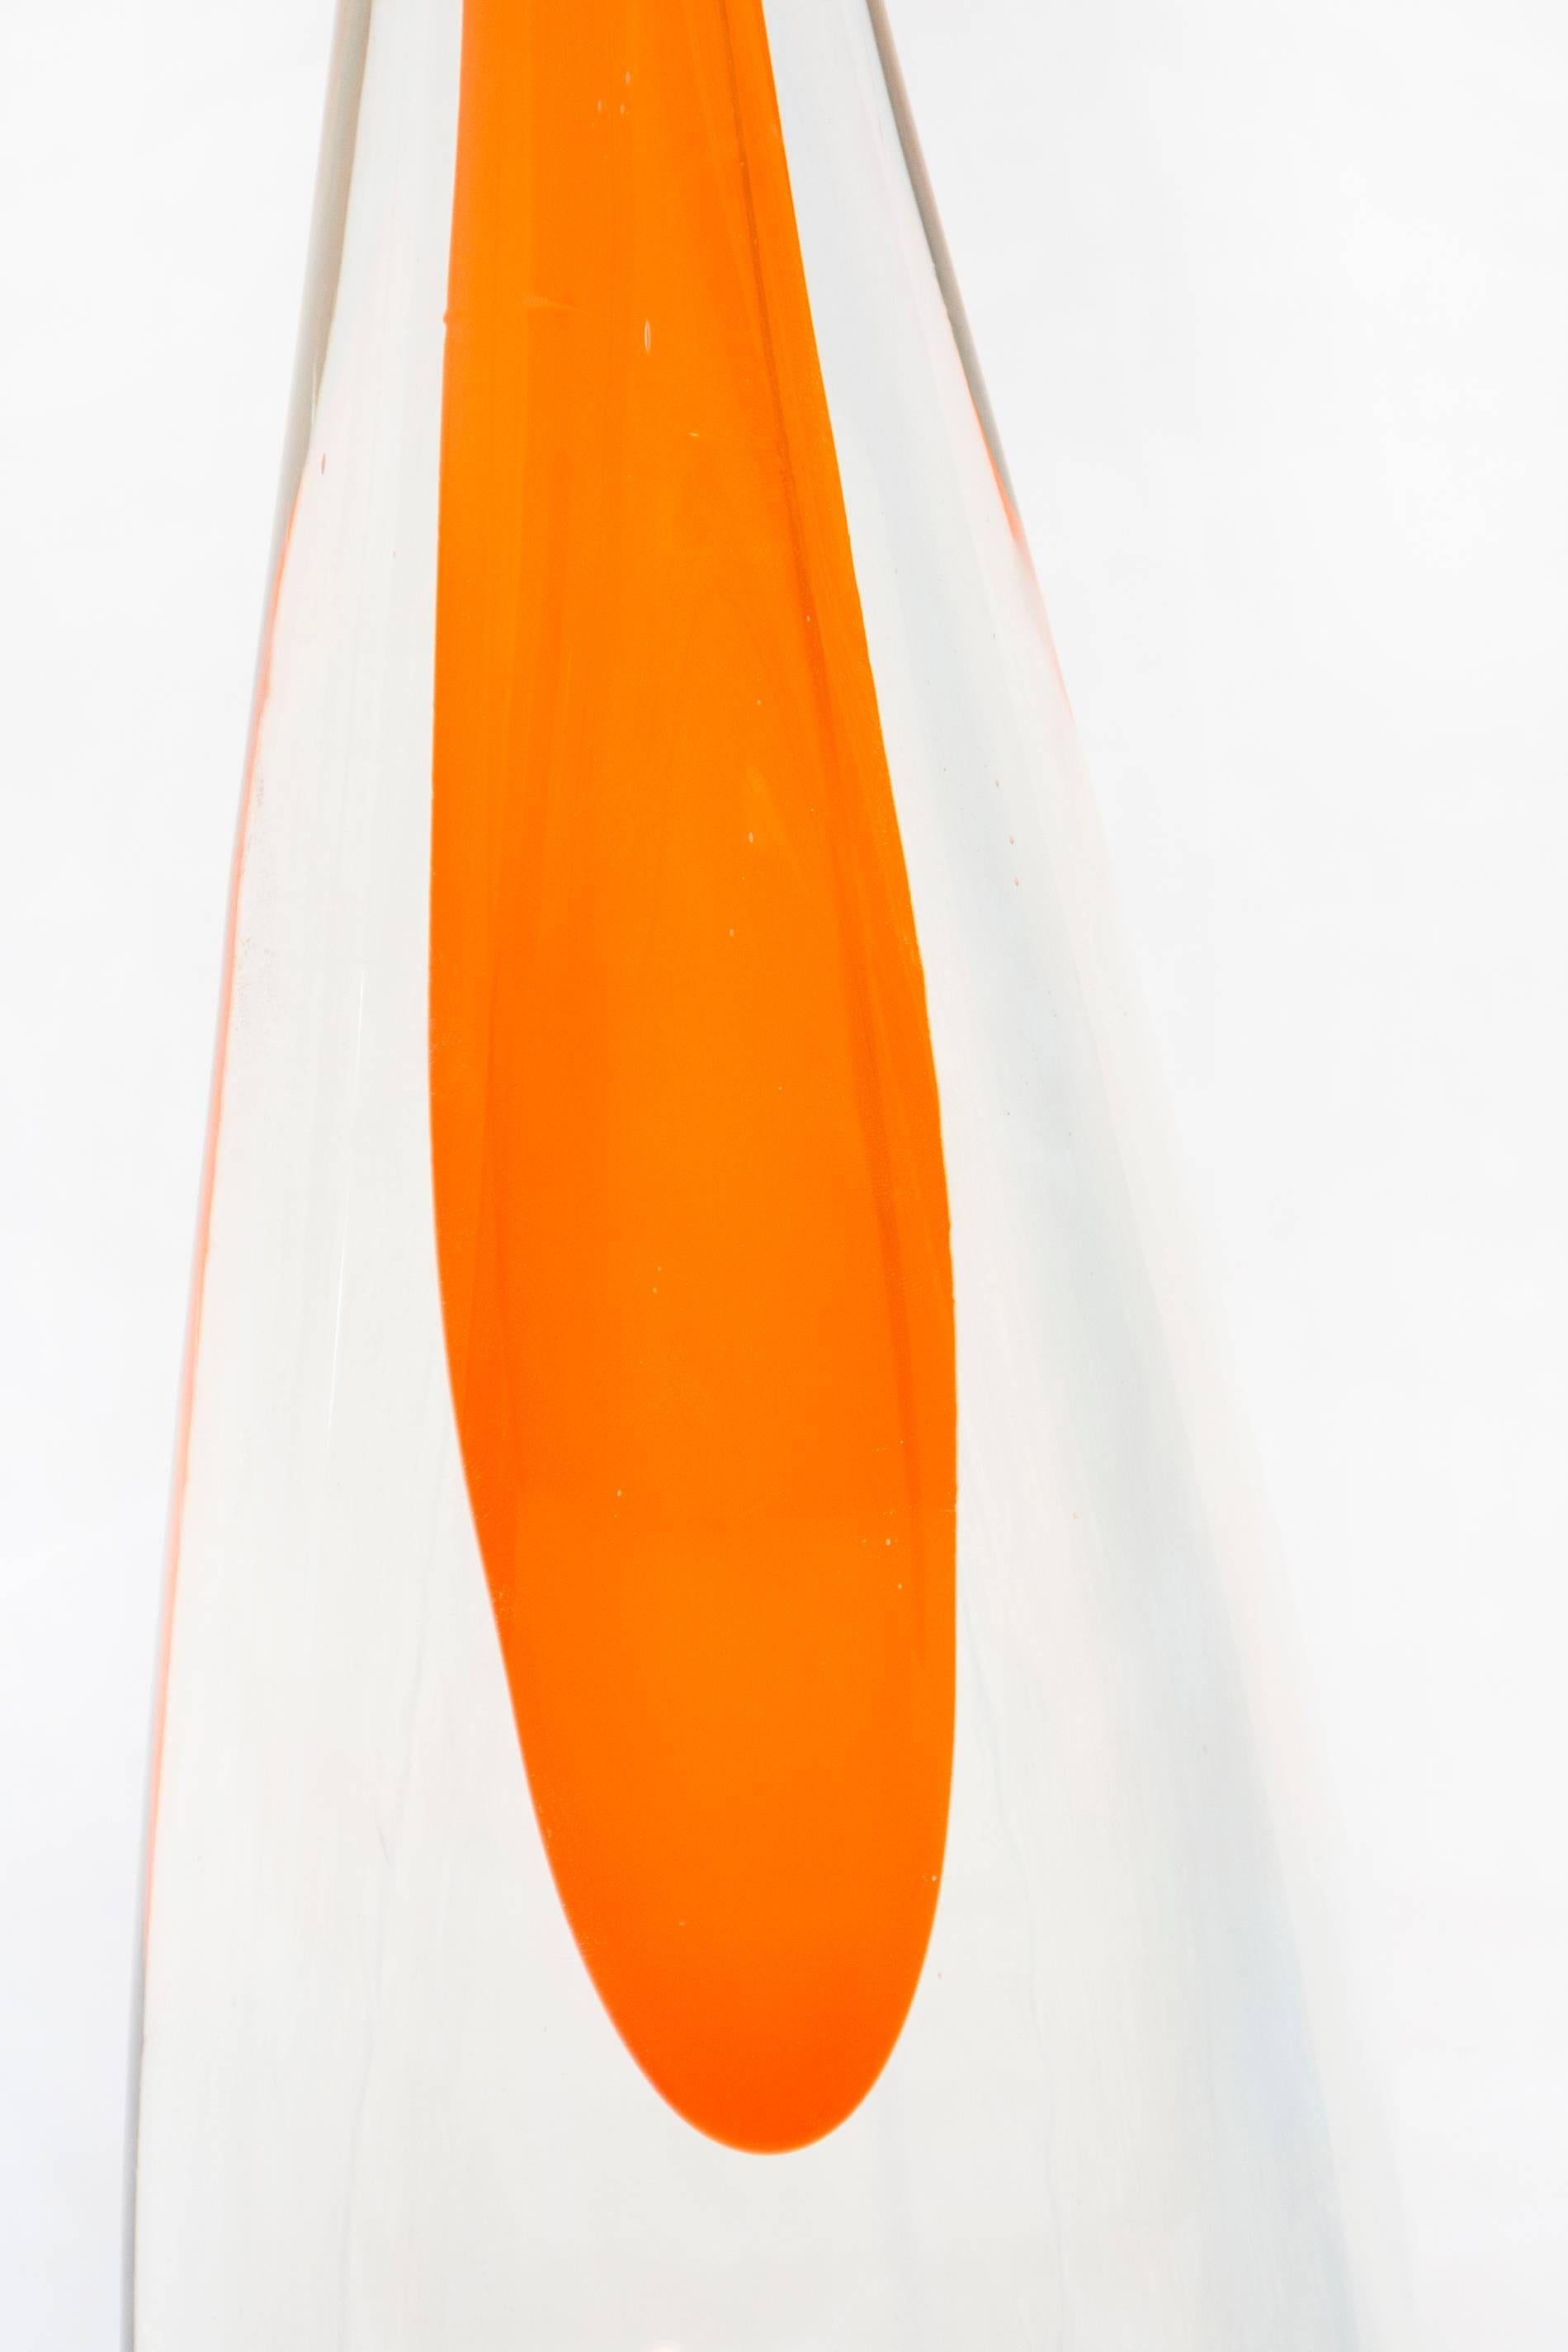 Evolution Bottle - Tall Orange - Gray Abstract Sculpture by Eileen Gordon